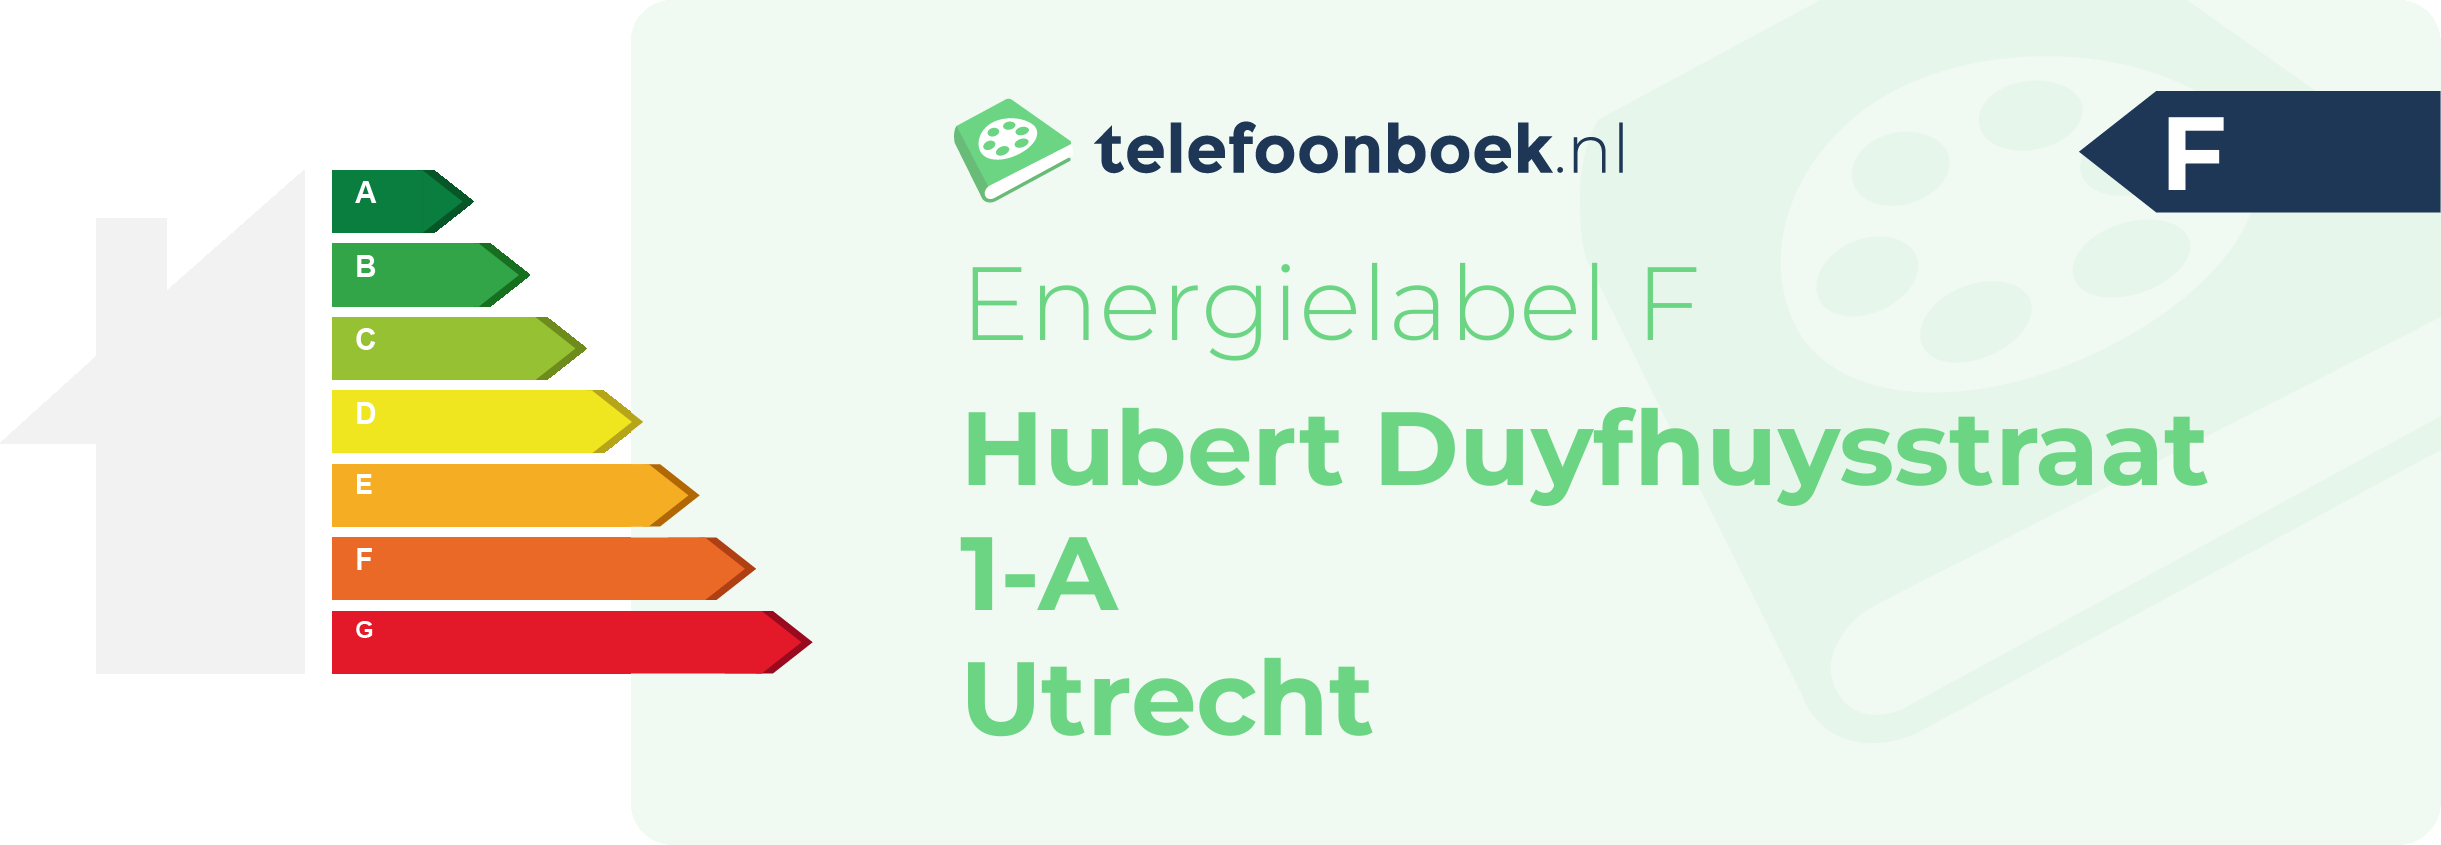 Energielabel Hubert Duyfhuysstraat 1-A Utrecht